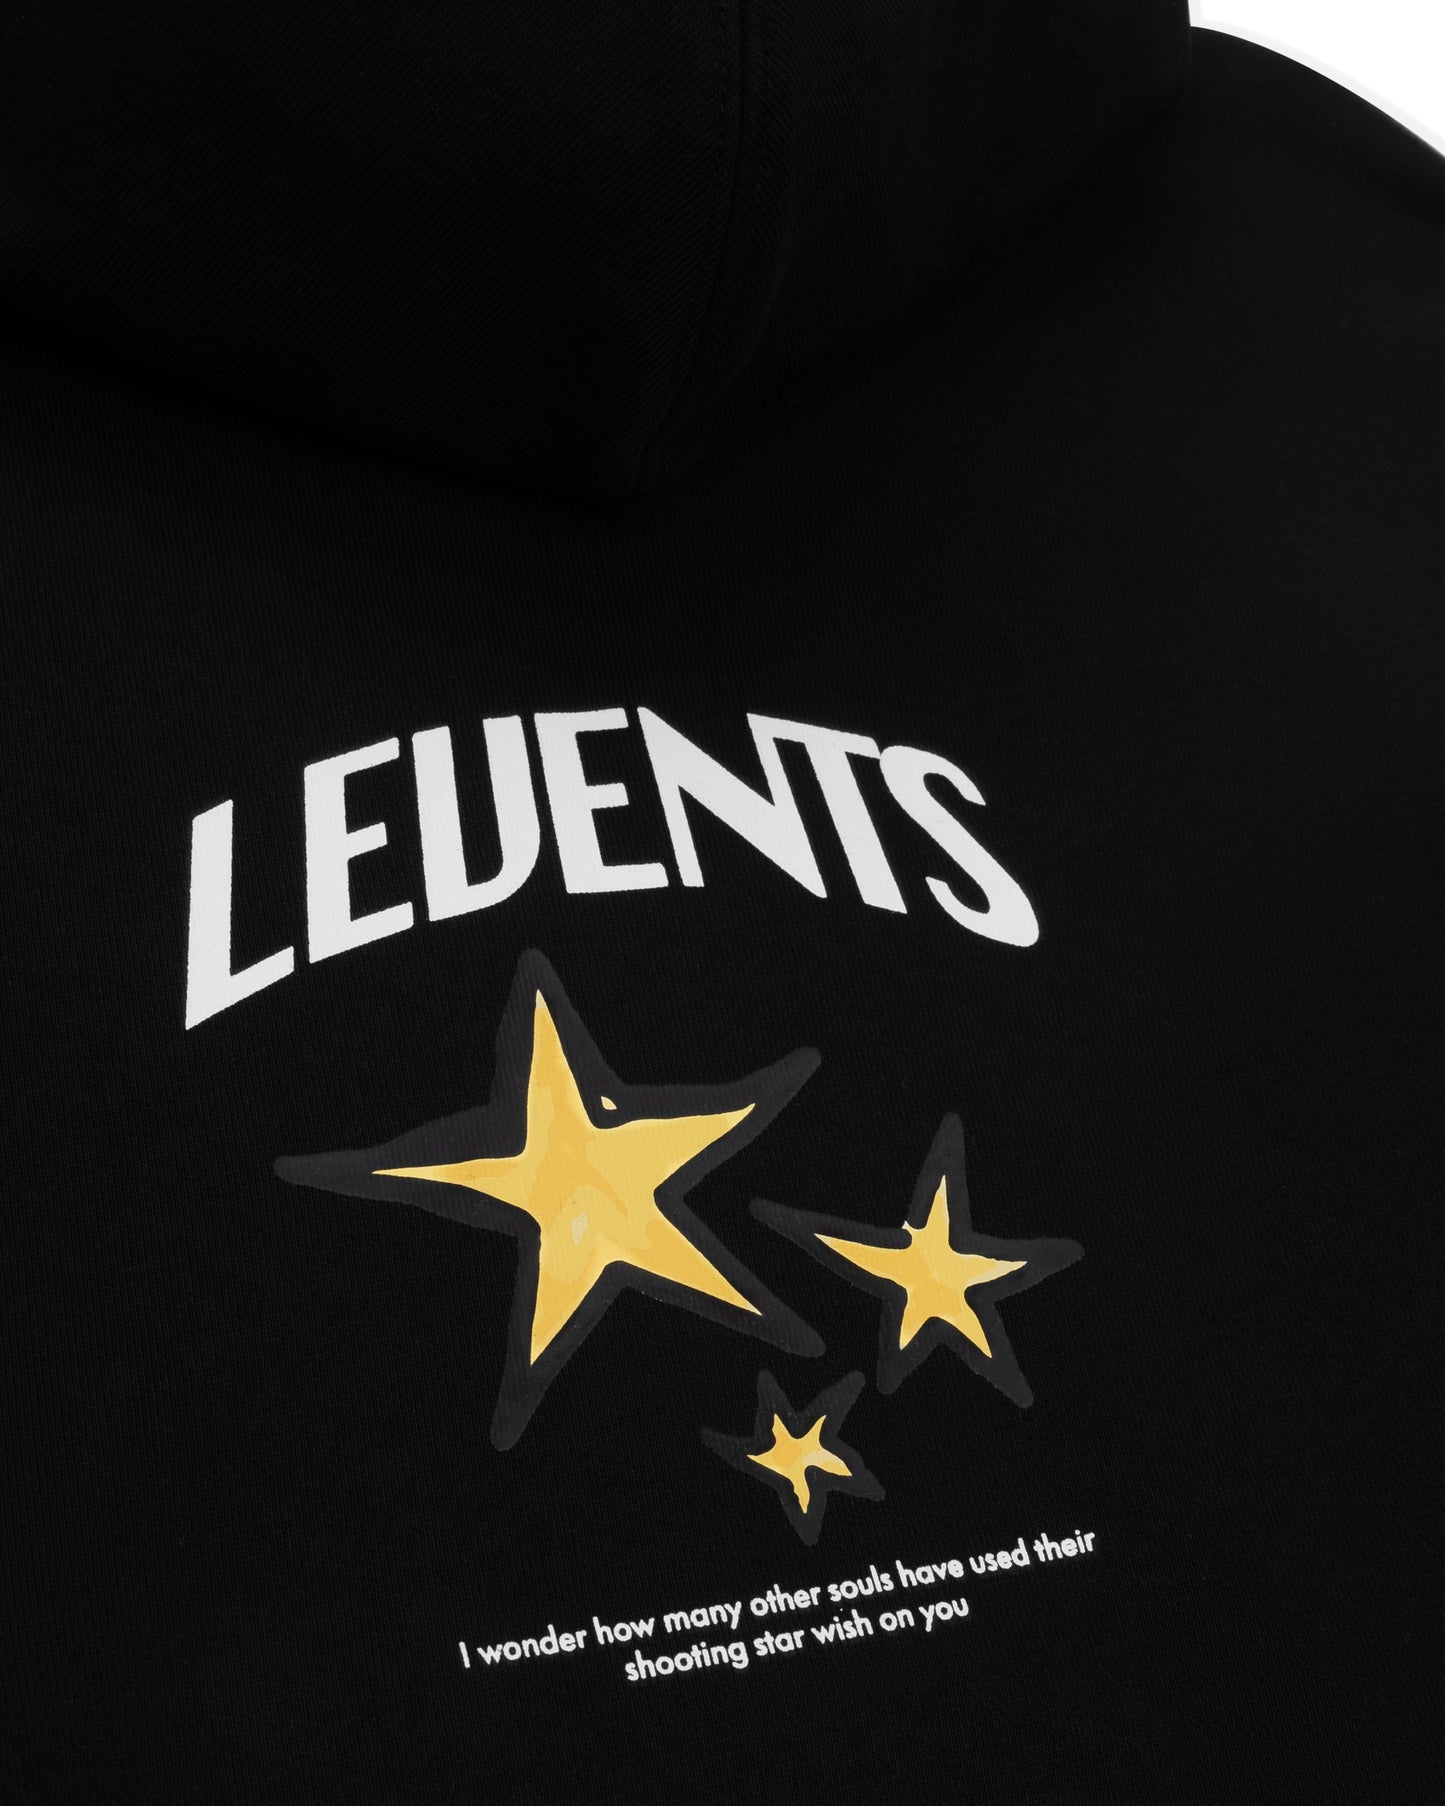 Levents® Star Boxy Hoodie/ Black